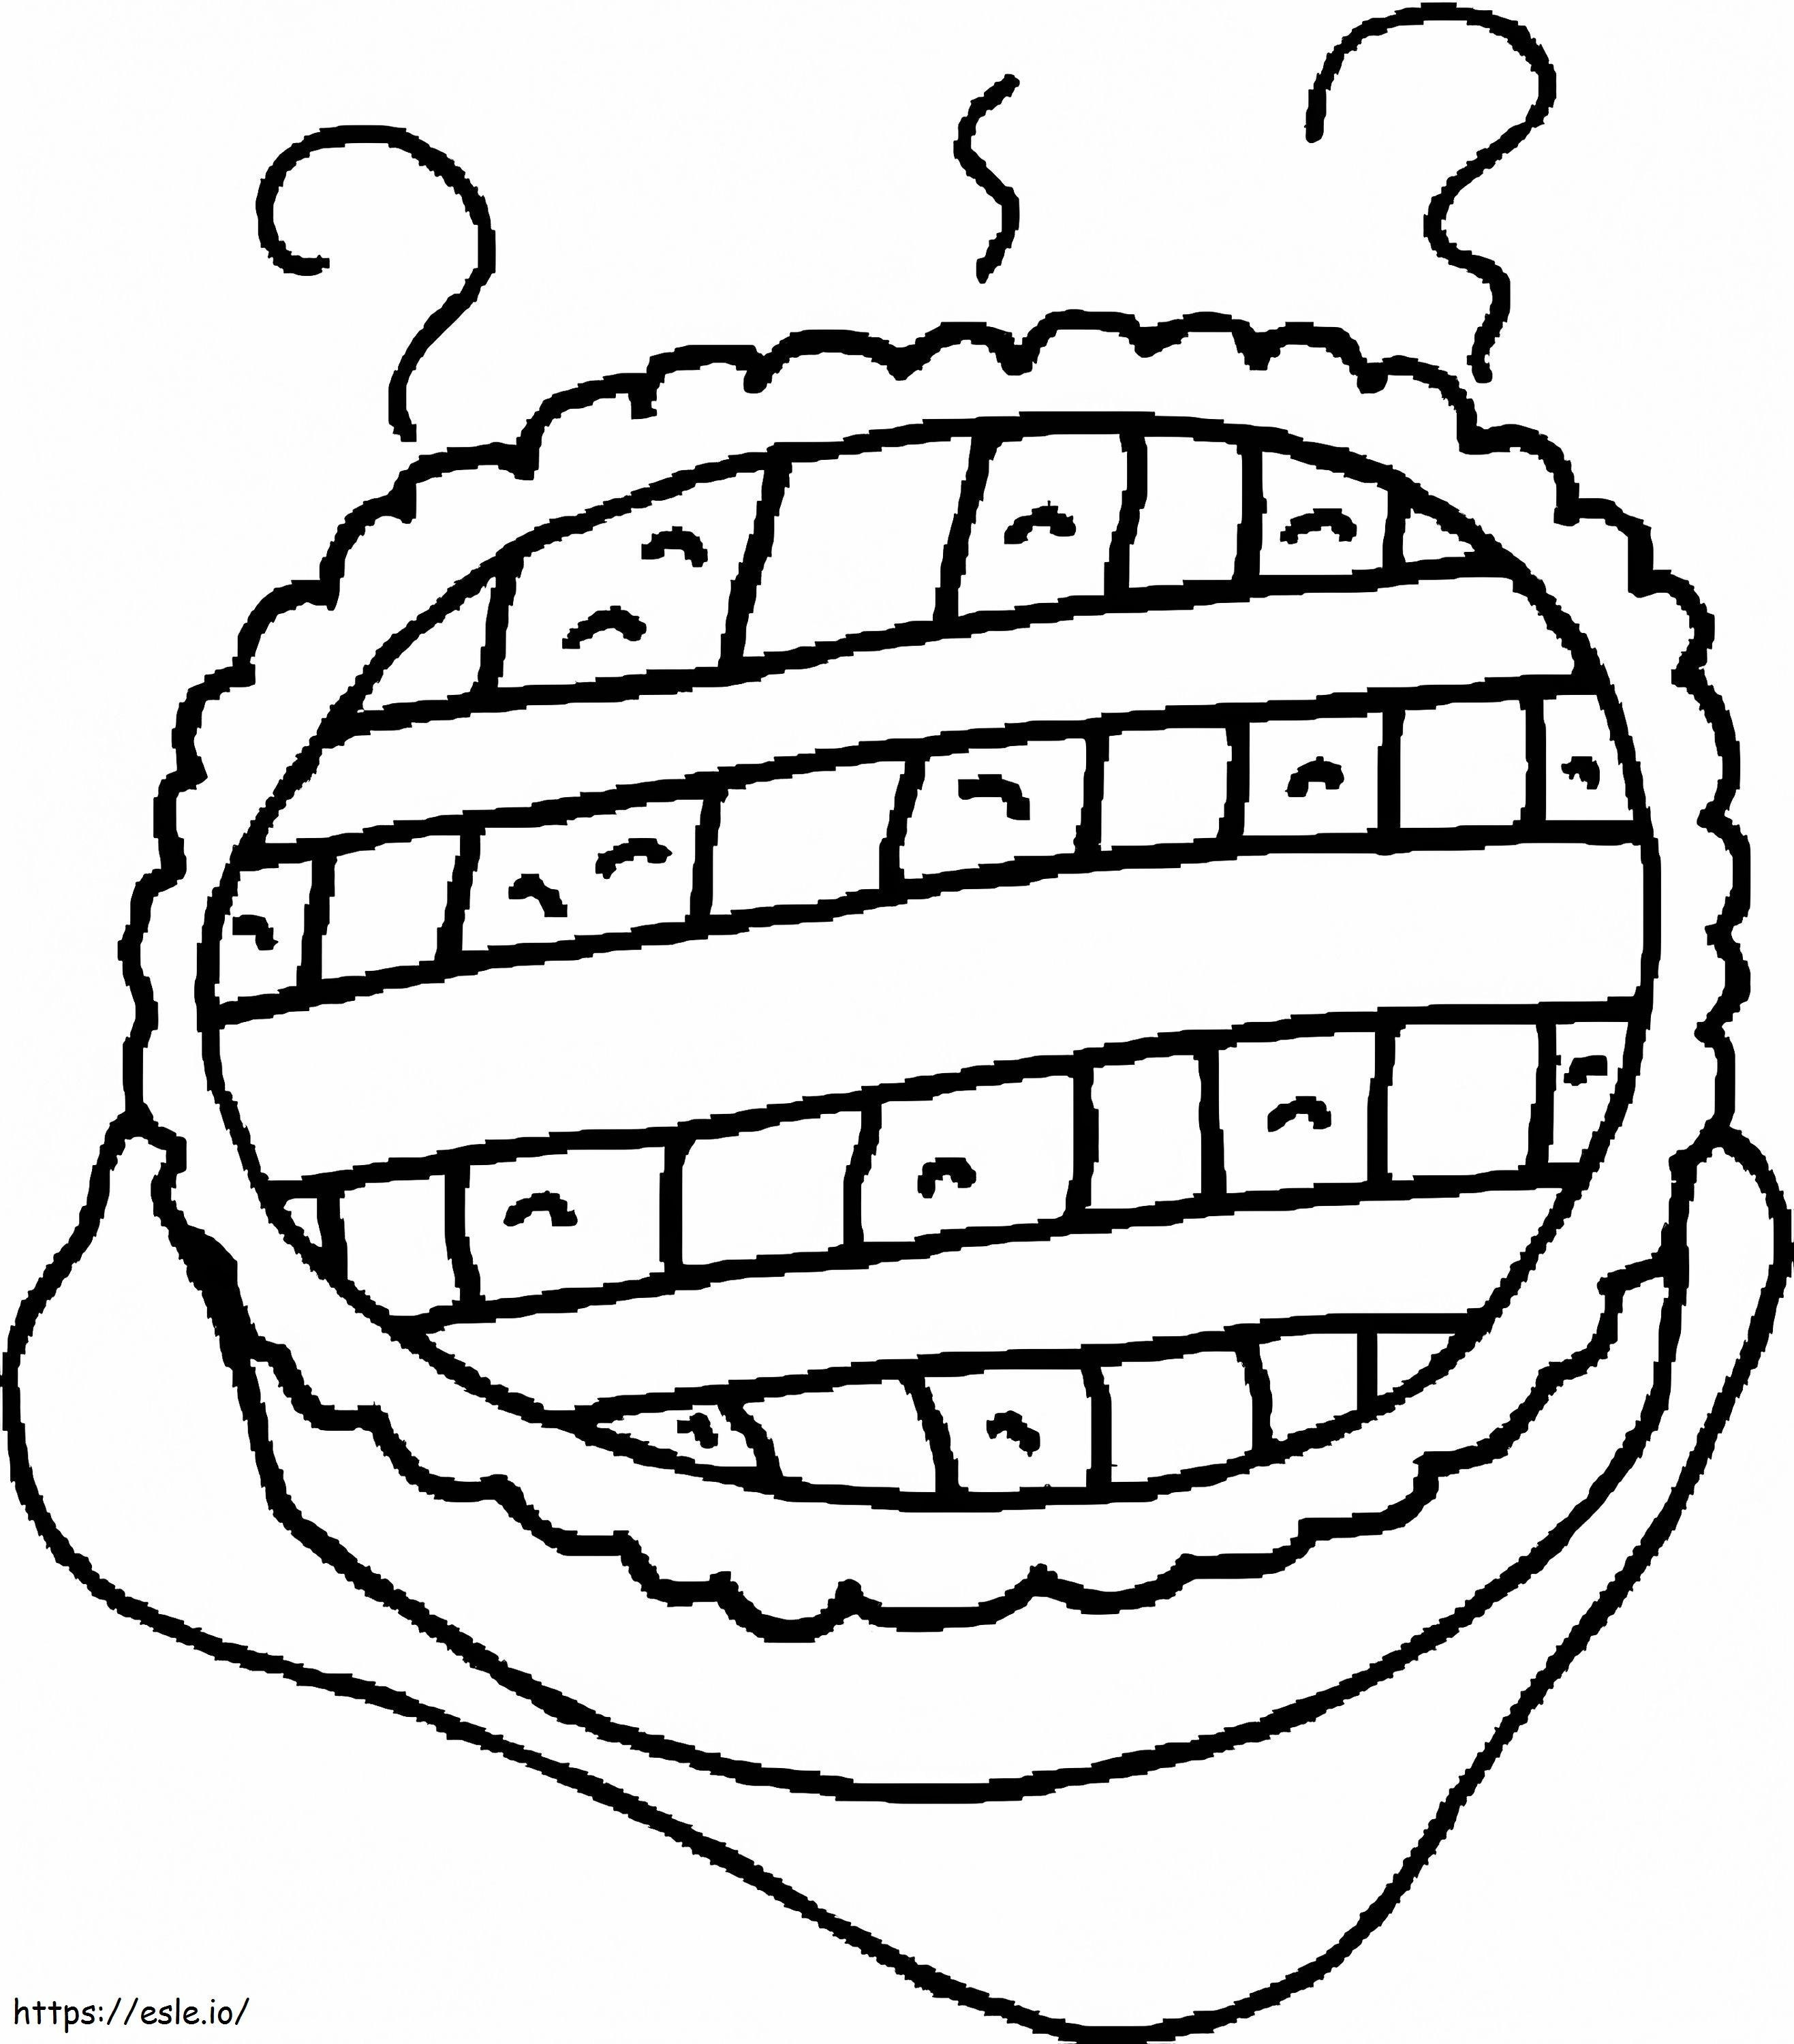 Lattice Pie coloring page